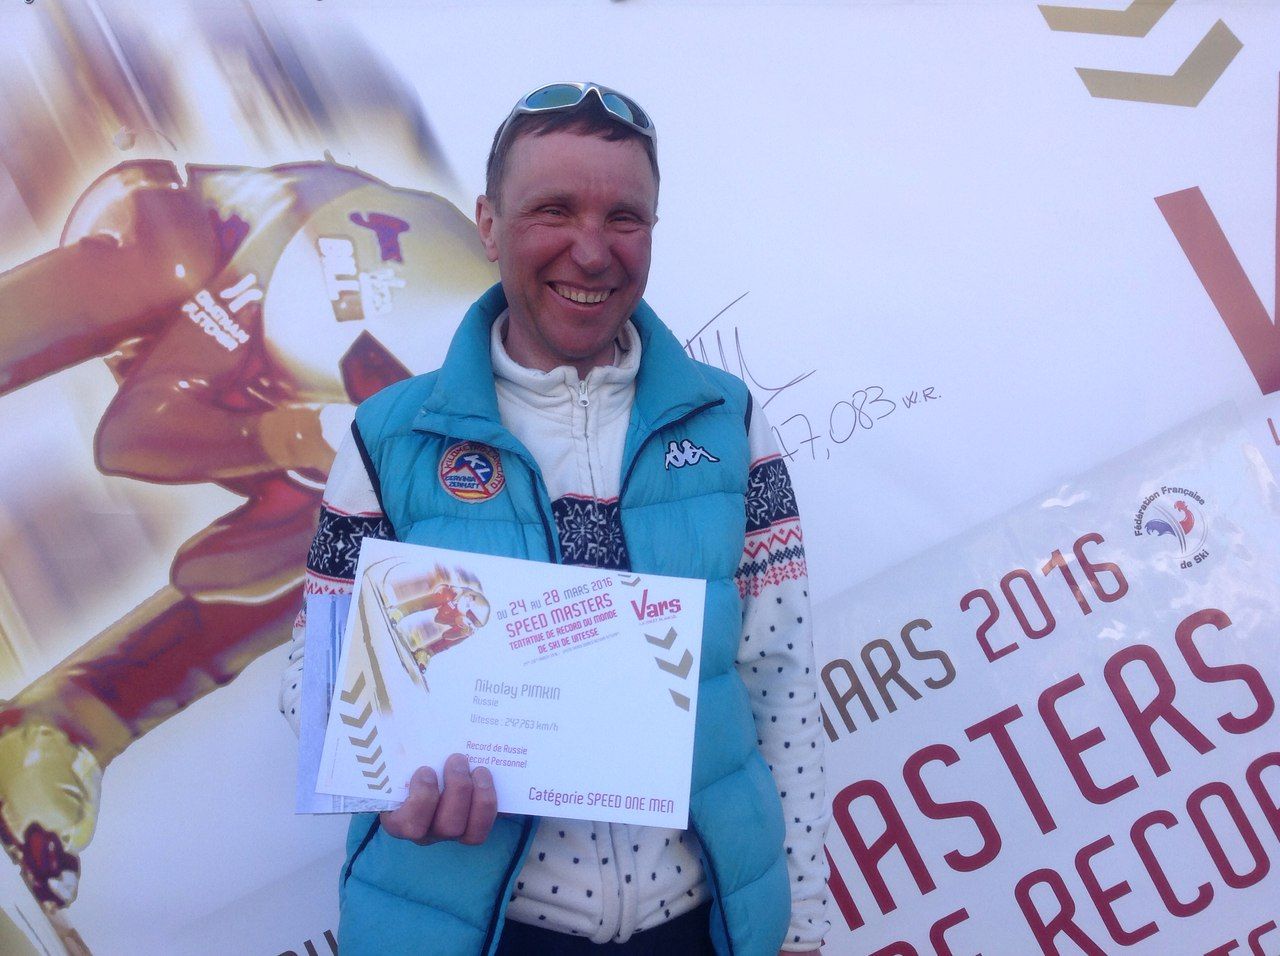 Петербуржец Николай Пимкин обновил рекорд скорости на лыжах